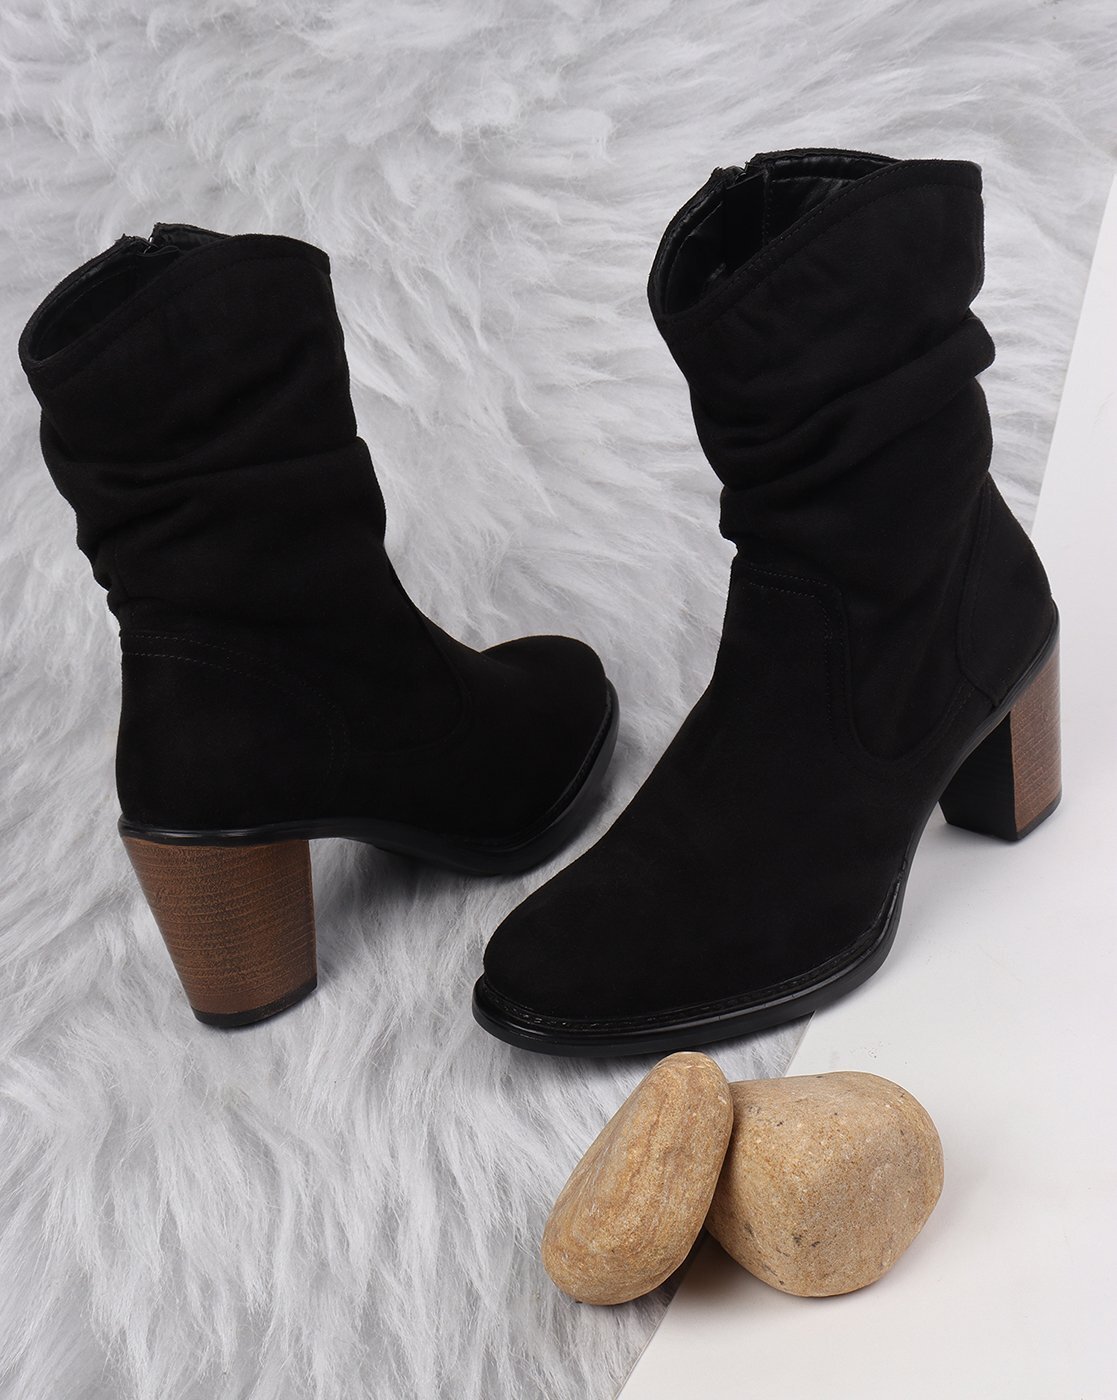 Buy Black Boots for Women by ELLE Online